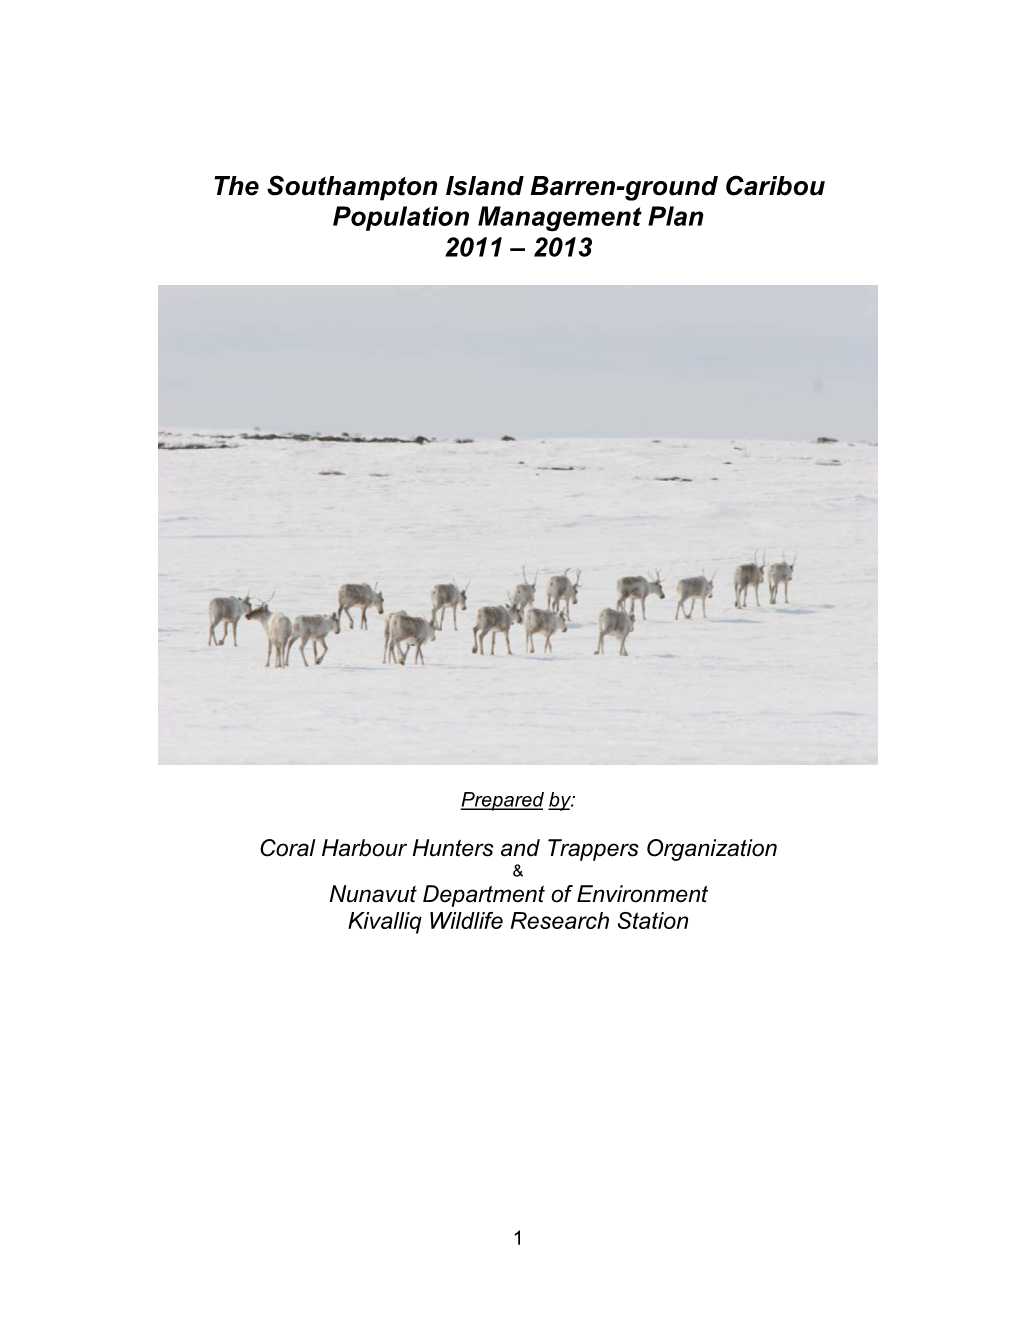 The Southampton Island Barren-Ground Caribou Population Management Plan 2011 – 2013